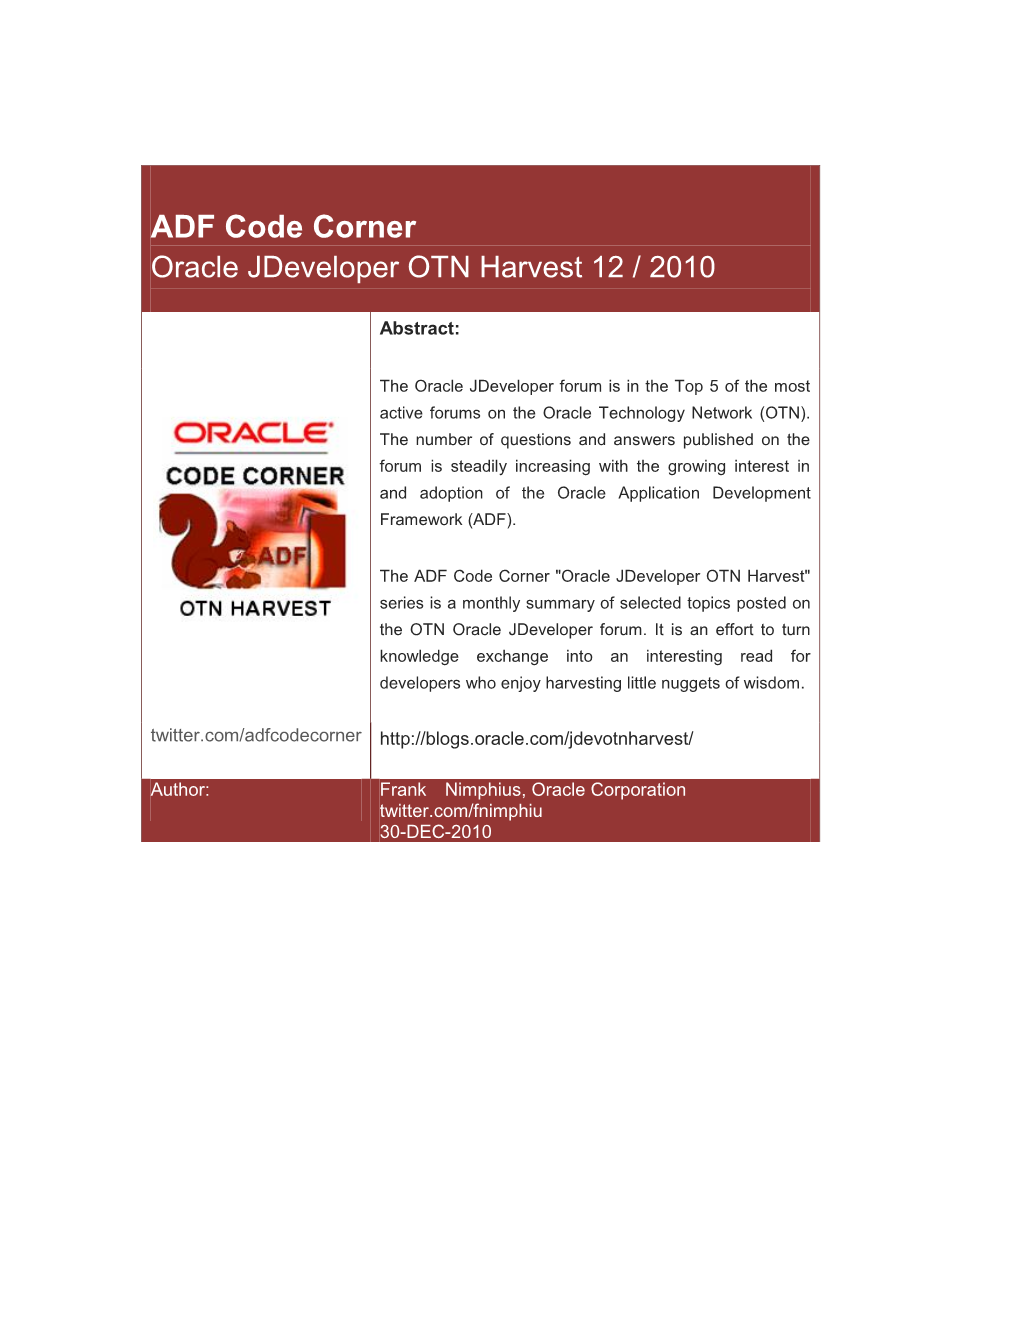 ADF Code Corner: Oracle Jdeveloper OTN Harvest Xx / 2010